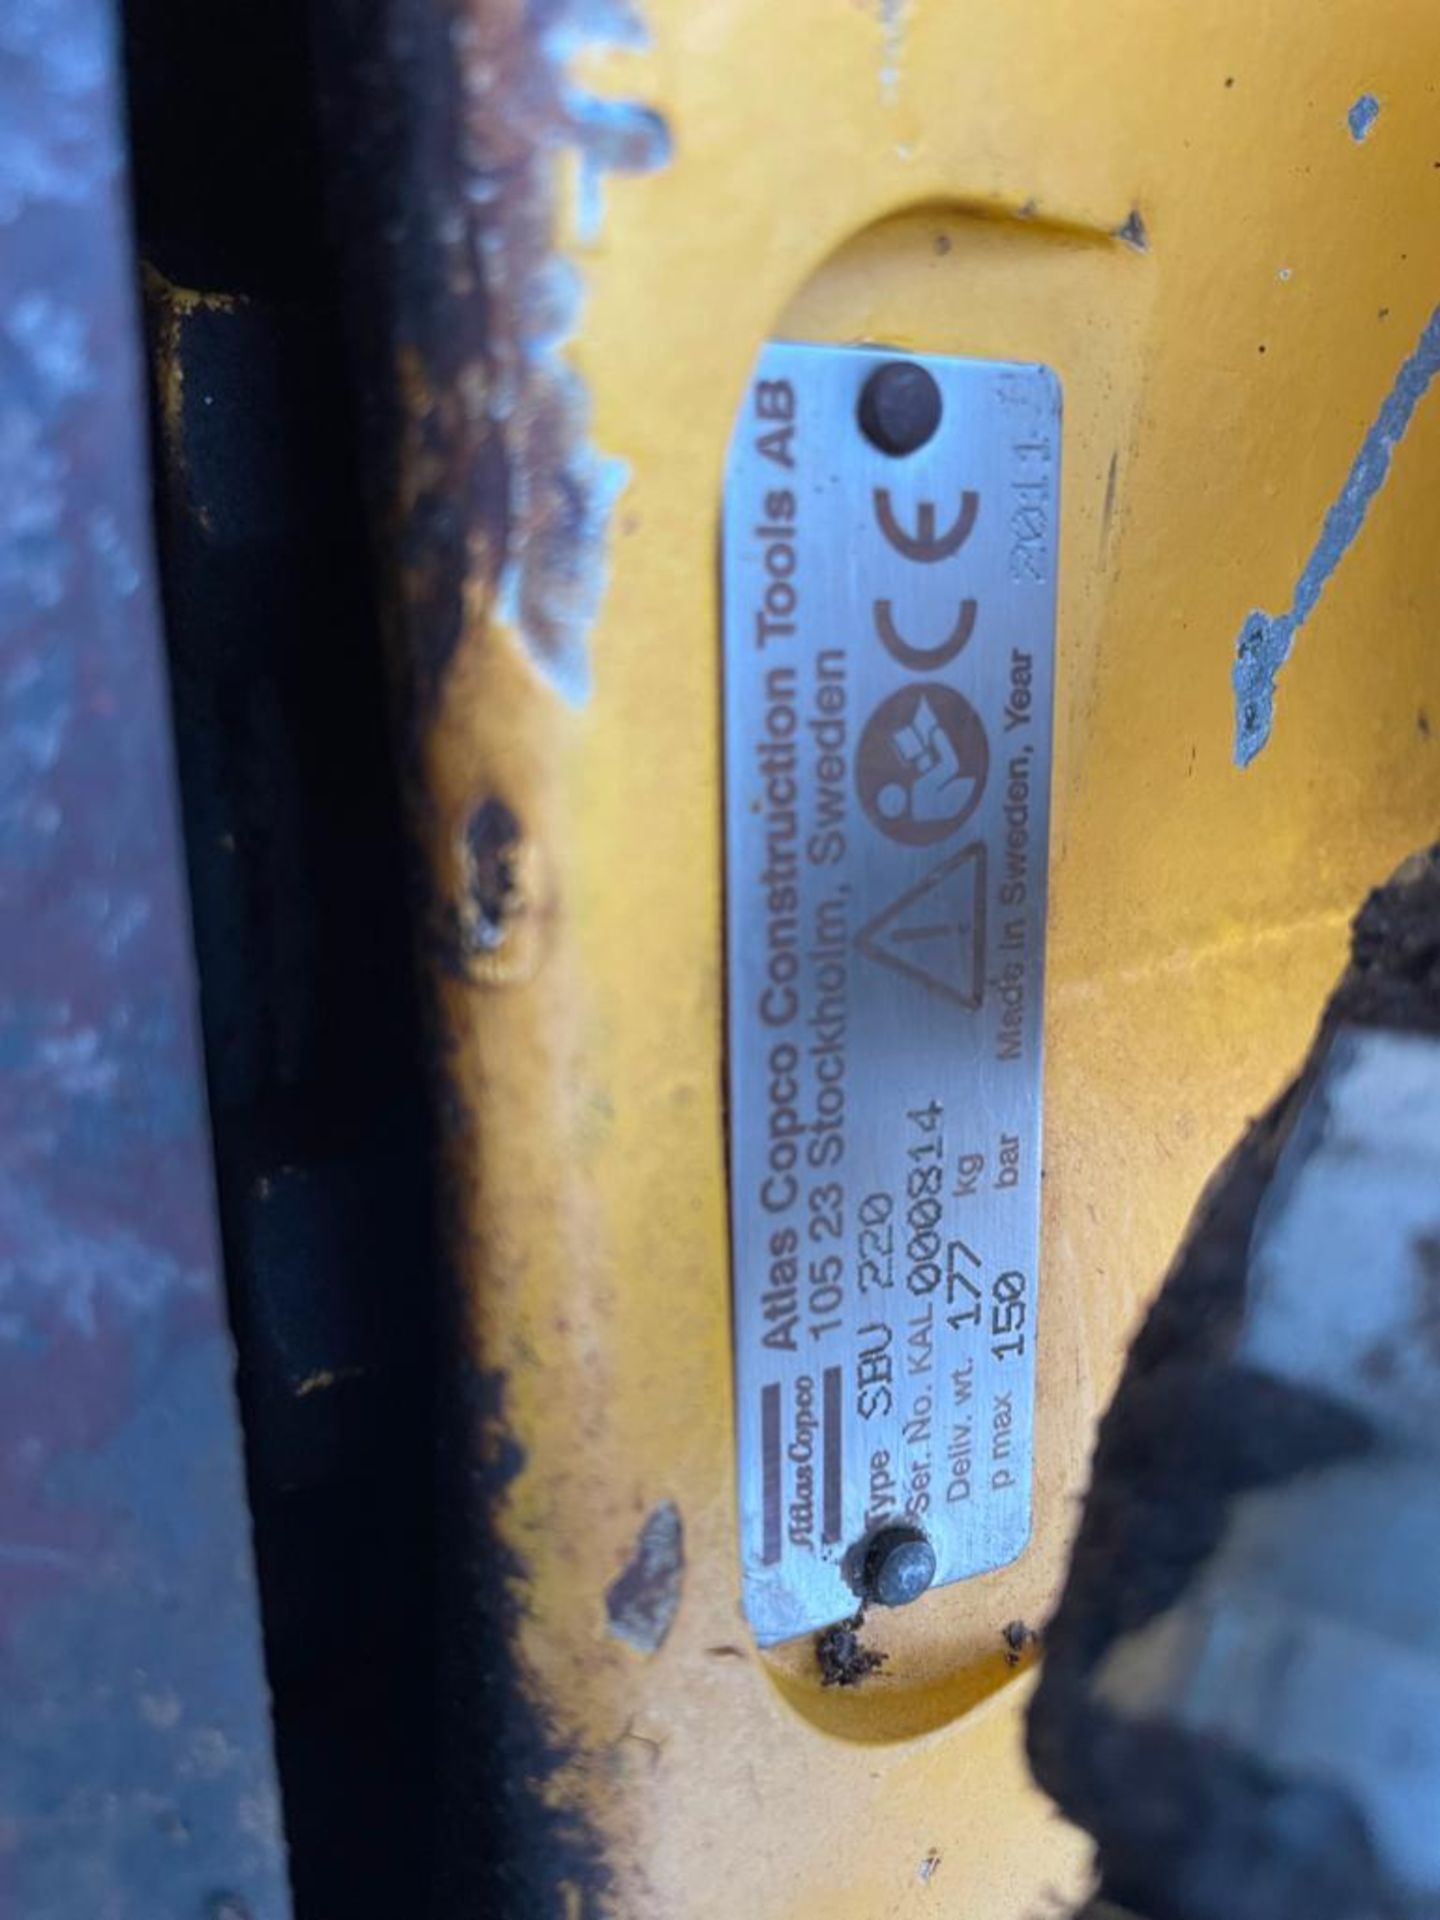 2011 Atlas Copco Type SBU 220 Hammer Breaker, Serial #000814. Located in Hazelwood, MO - Image 4 of 5